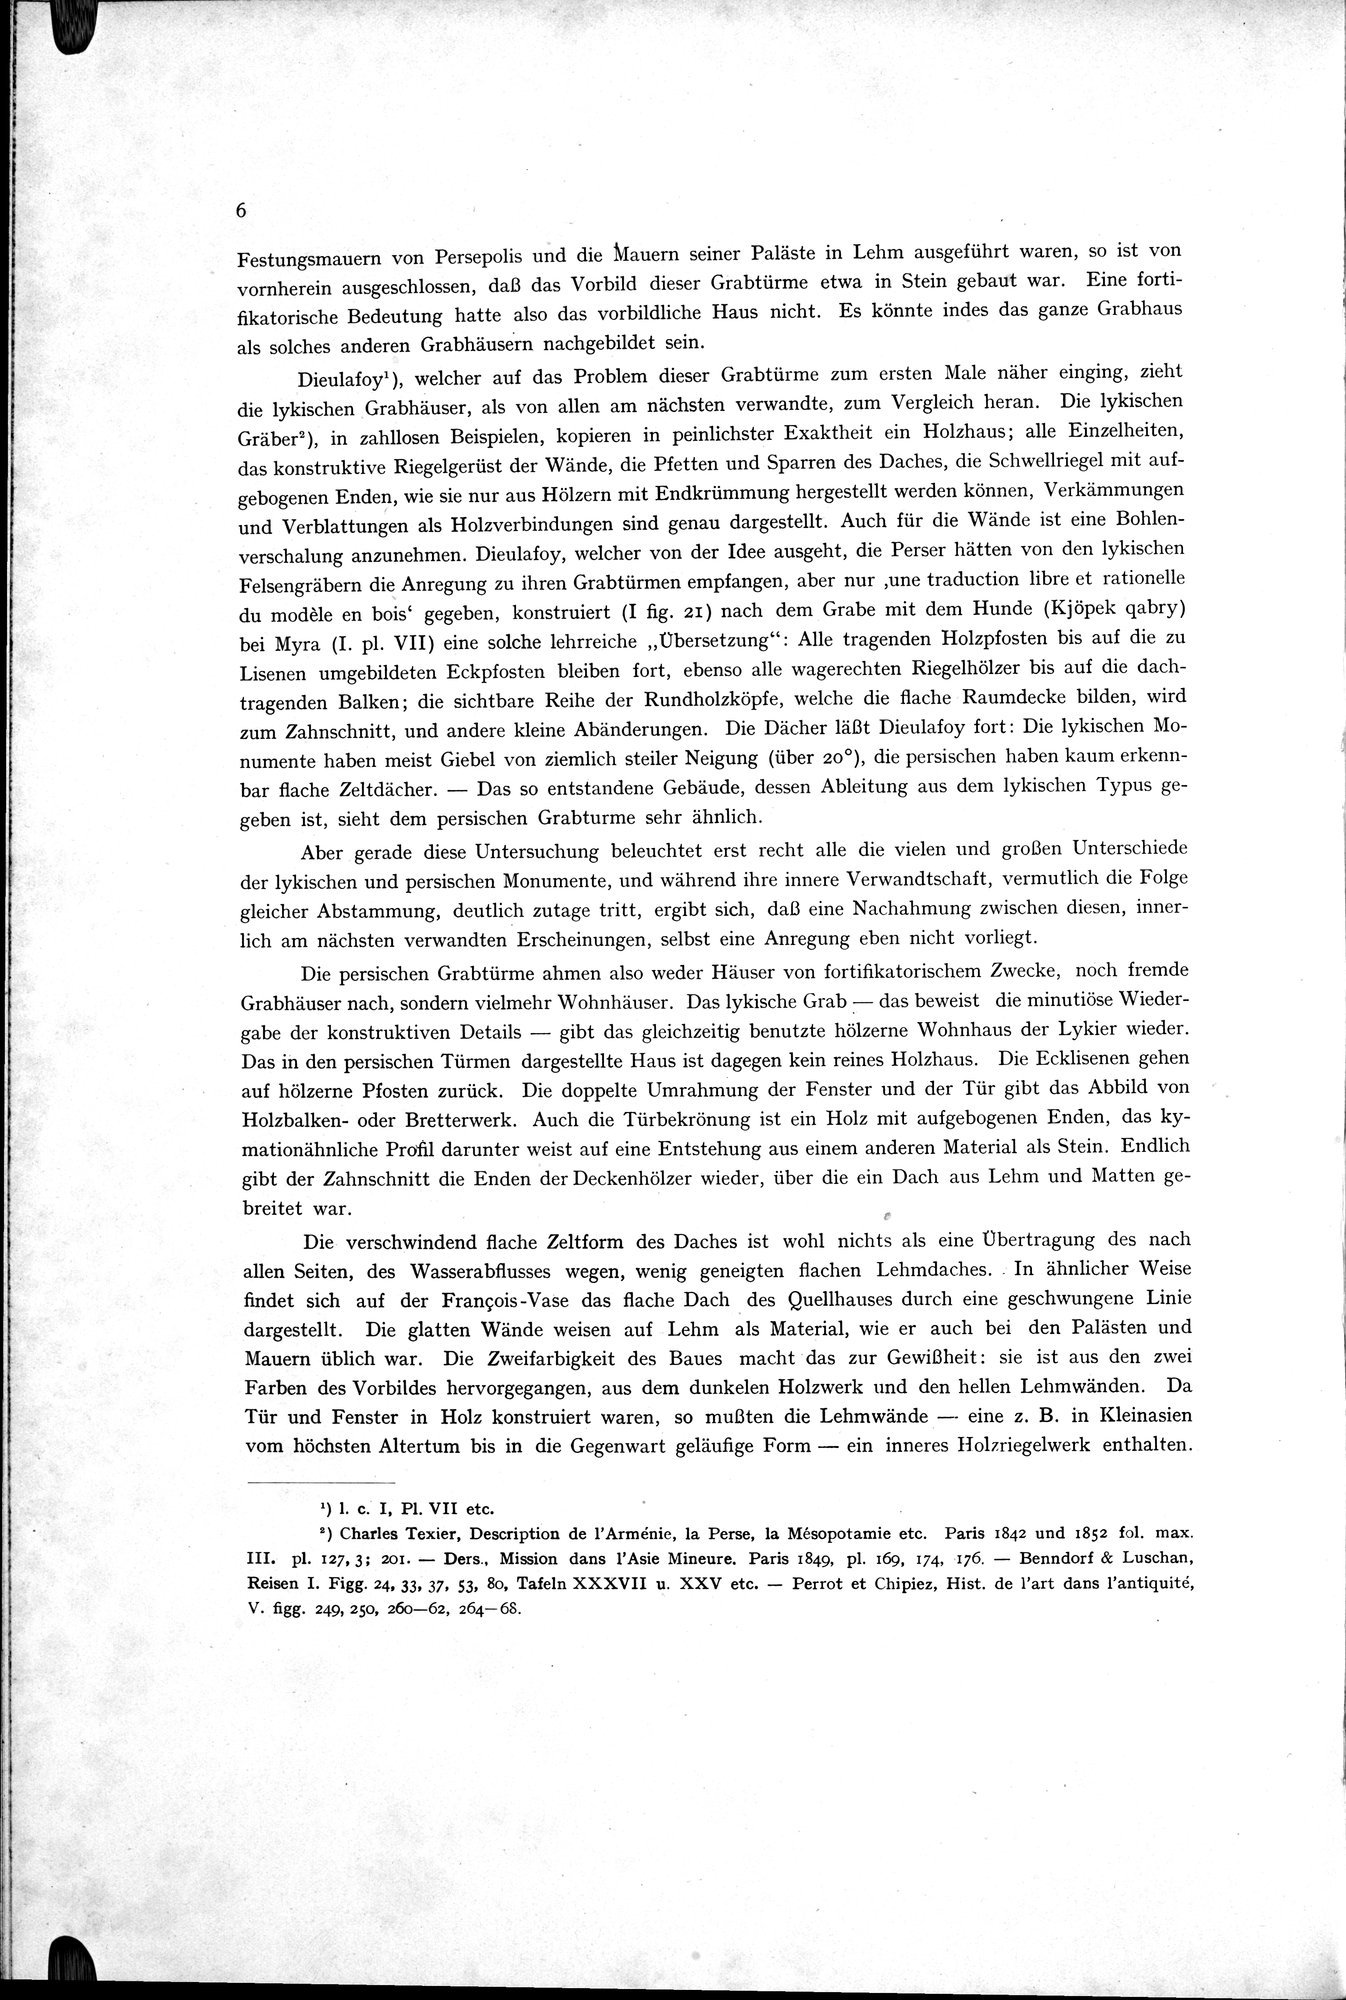 Iranische Felsreliefs : vol.1 / Page 18 (Grayscale High Resolution Image)